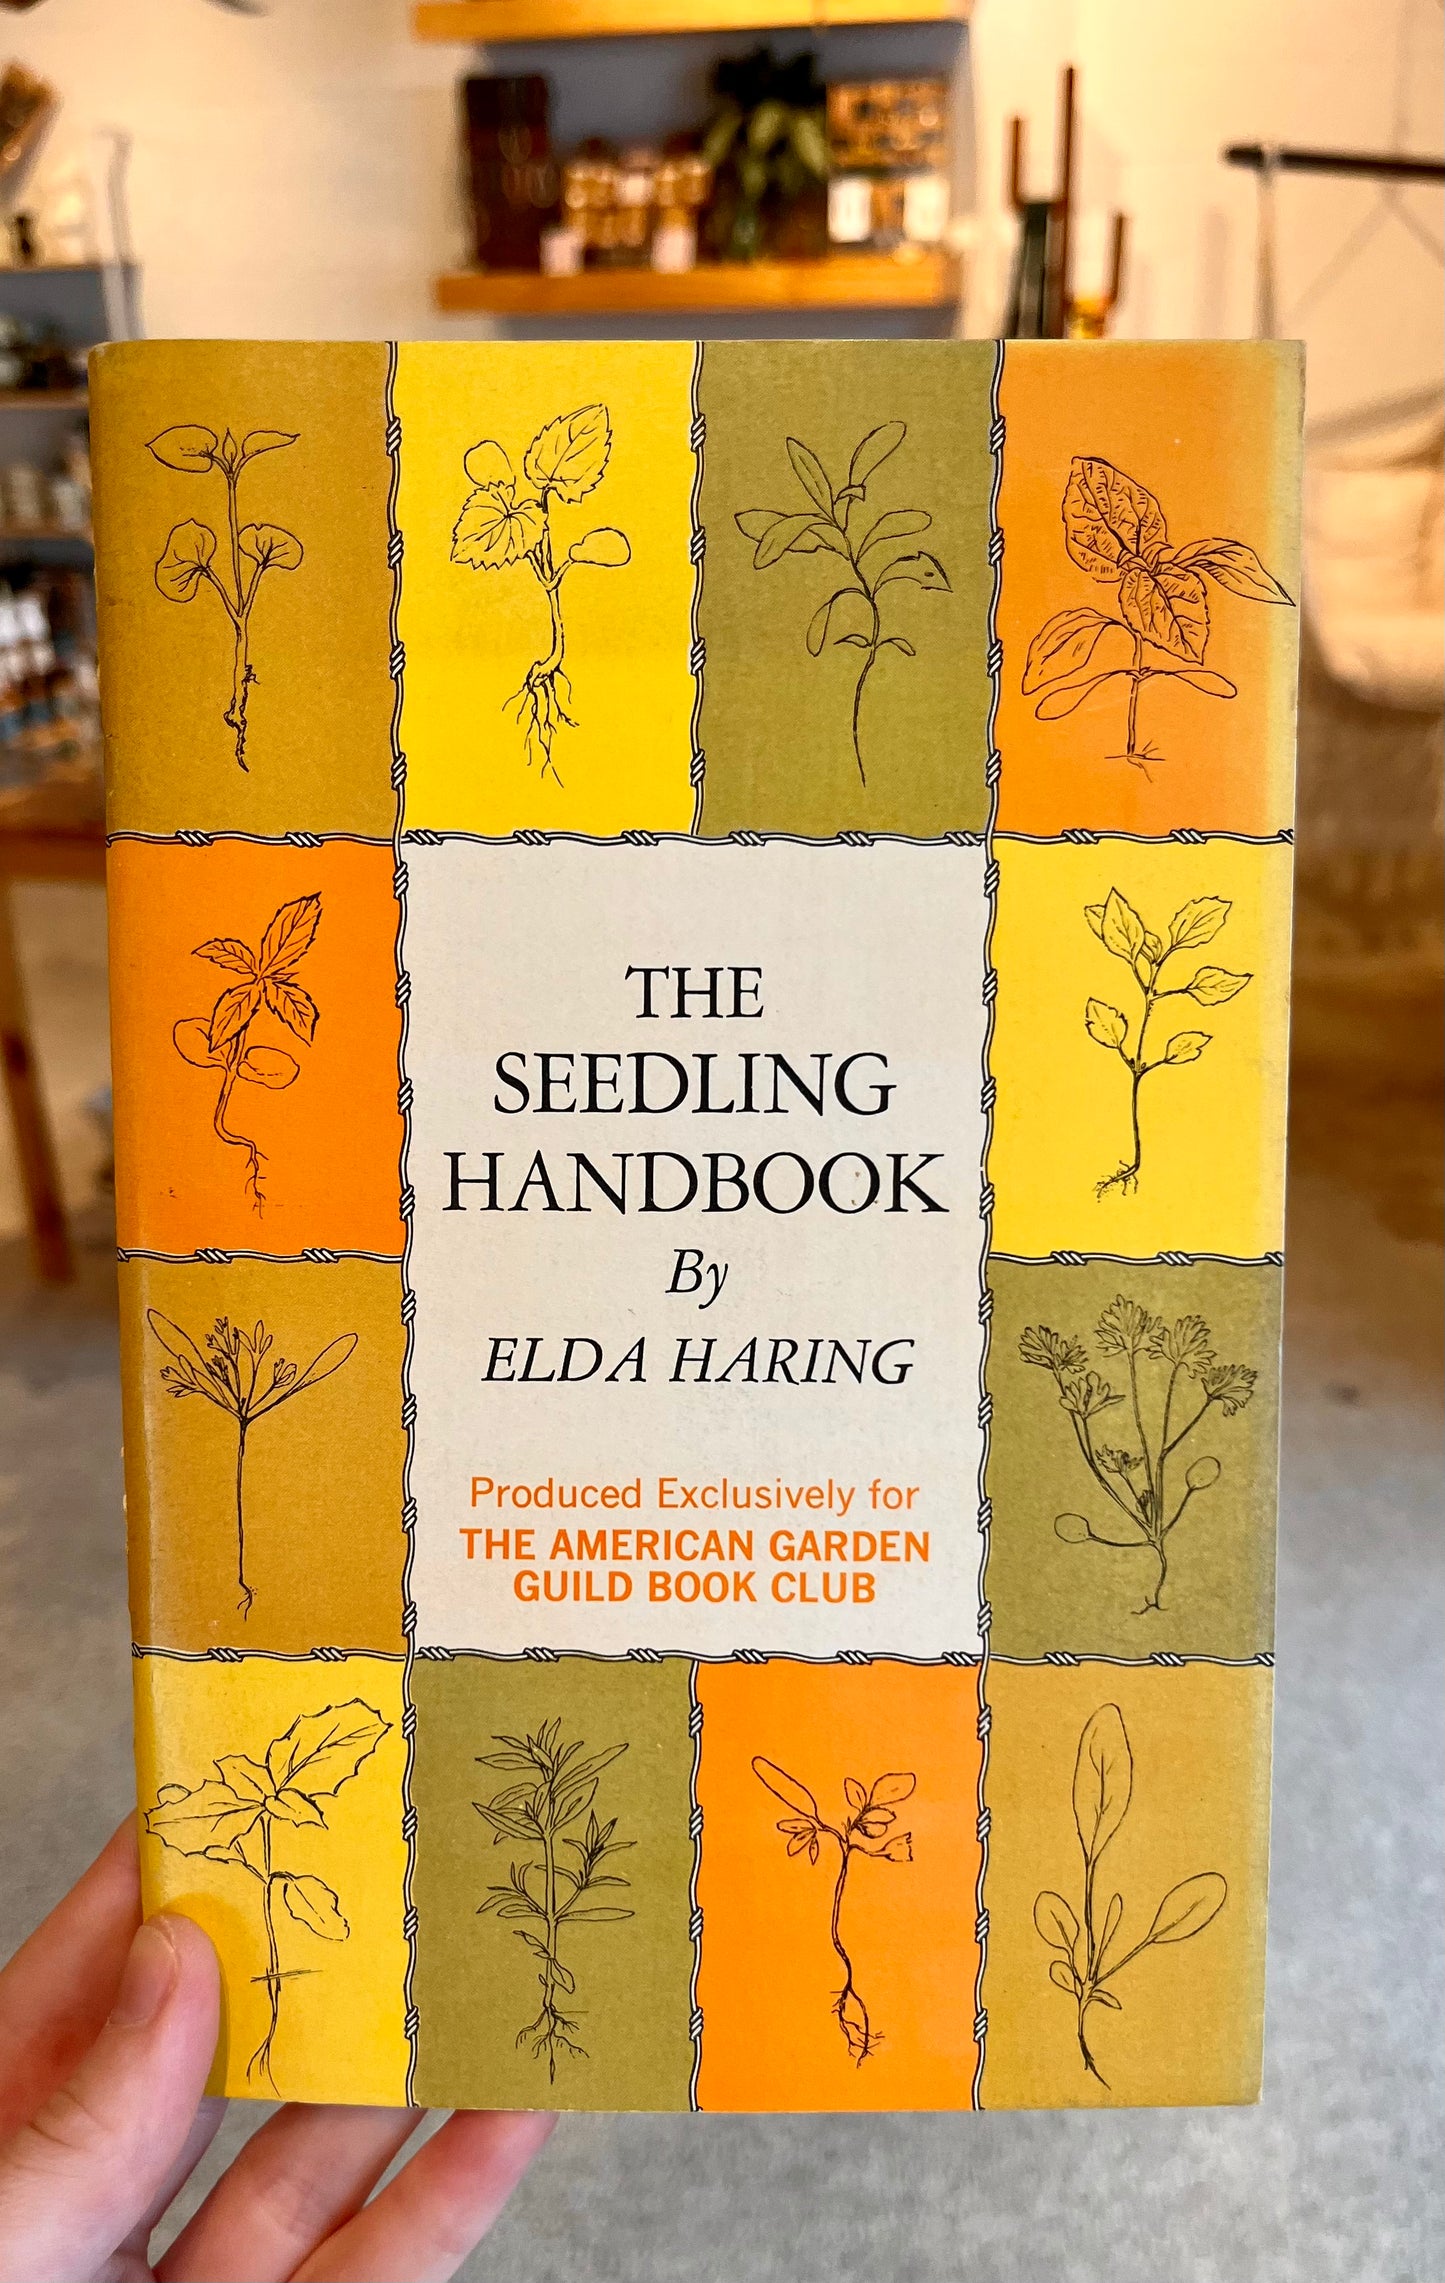 The Seedling Handbook